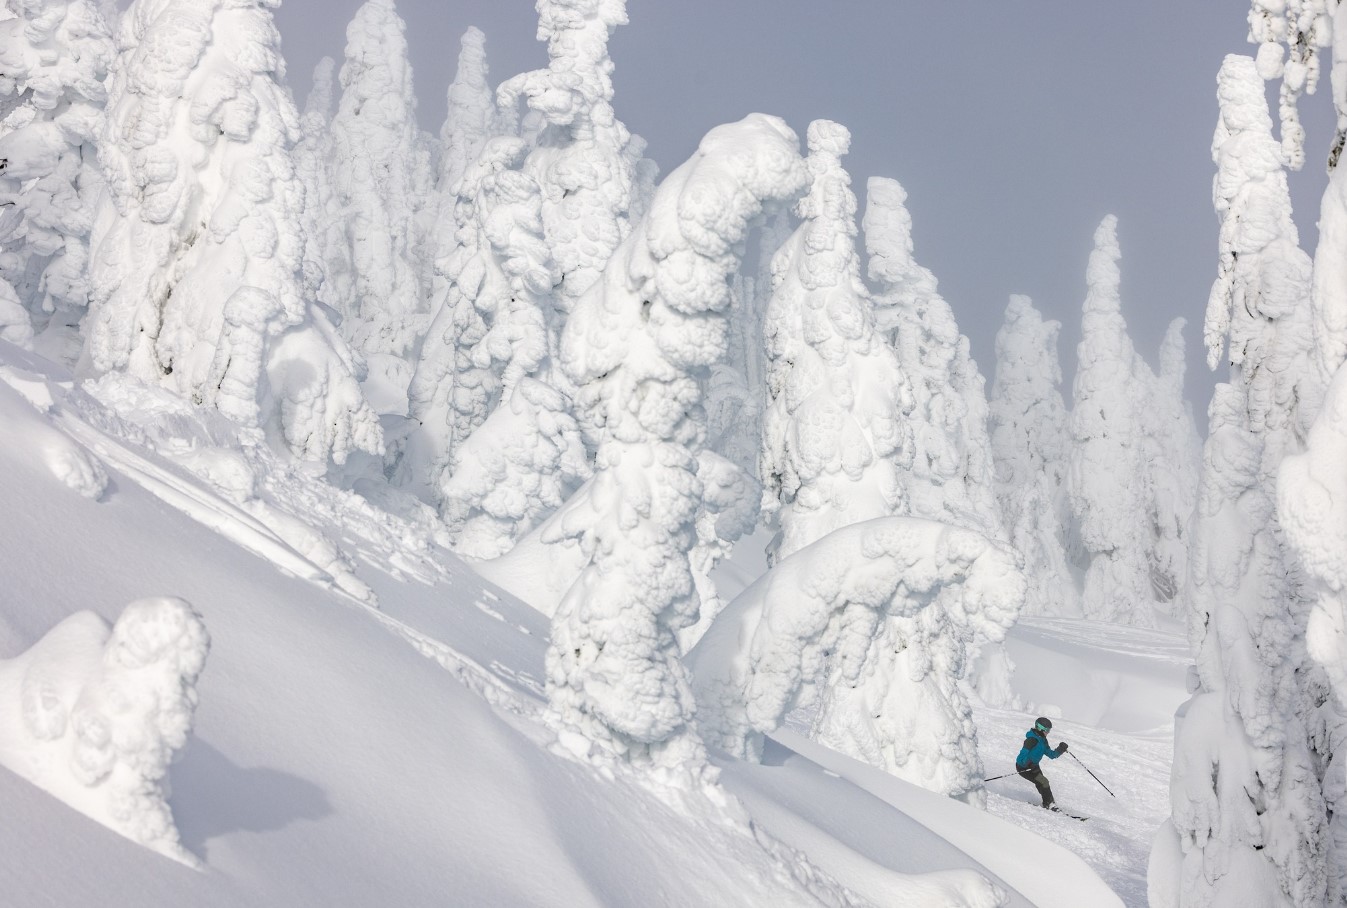 Mt Washington Ski Resort in British Columbia, Canada